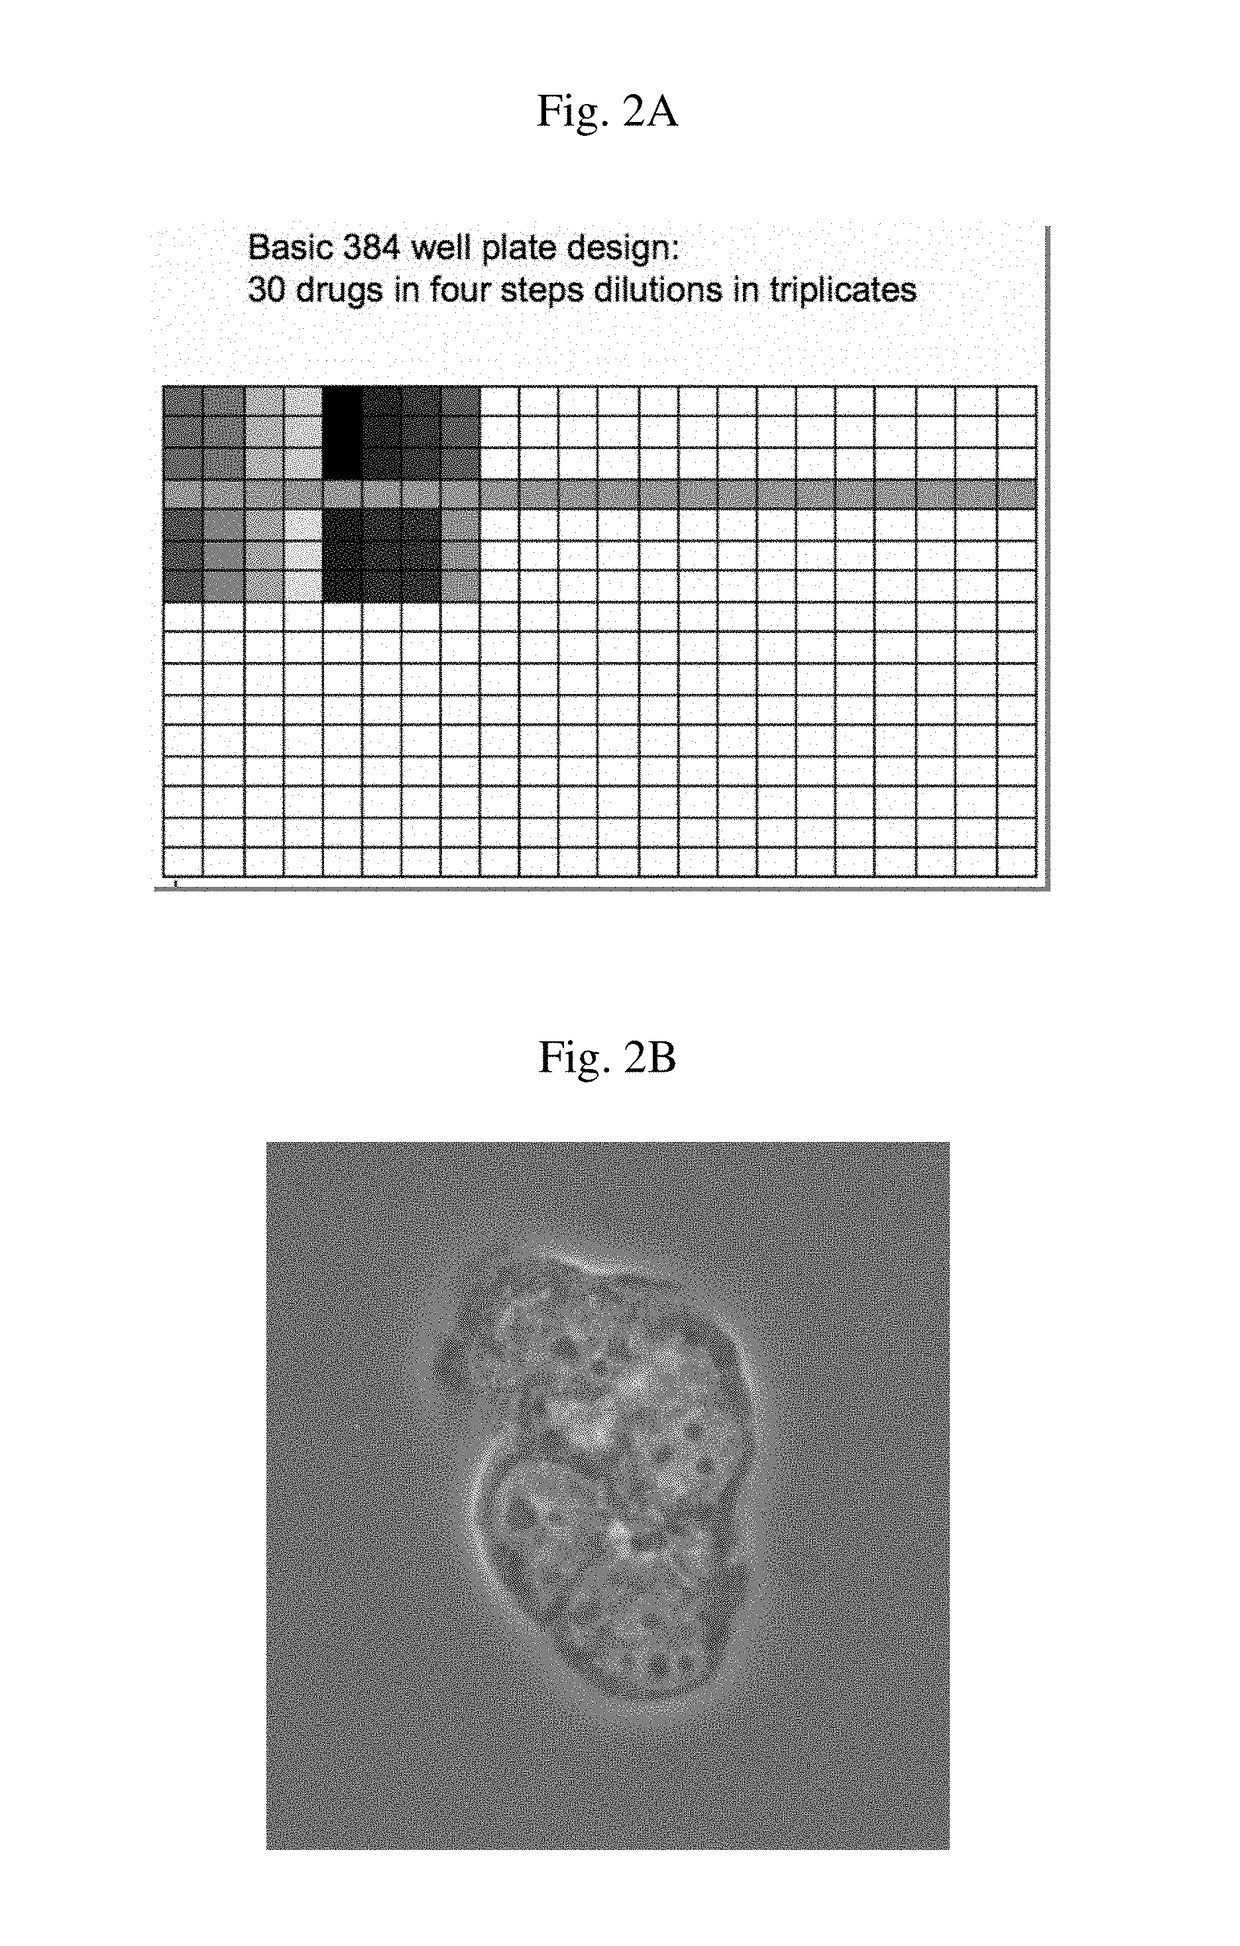 Cell culture medium